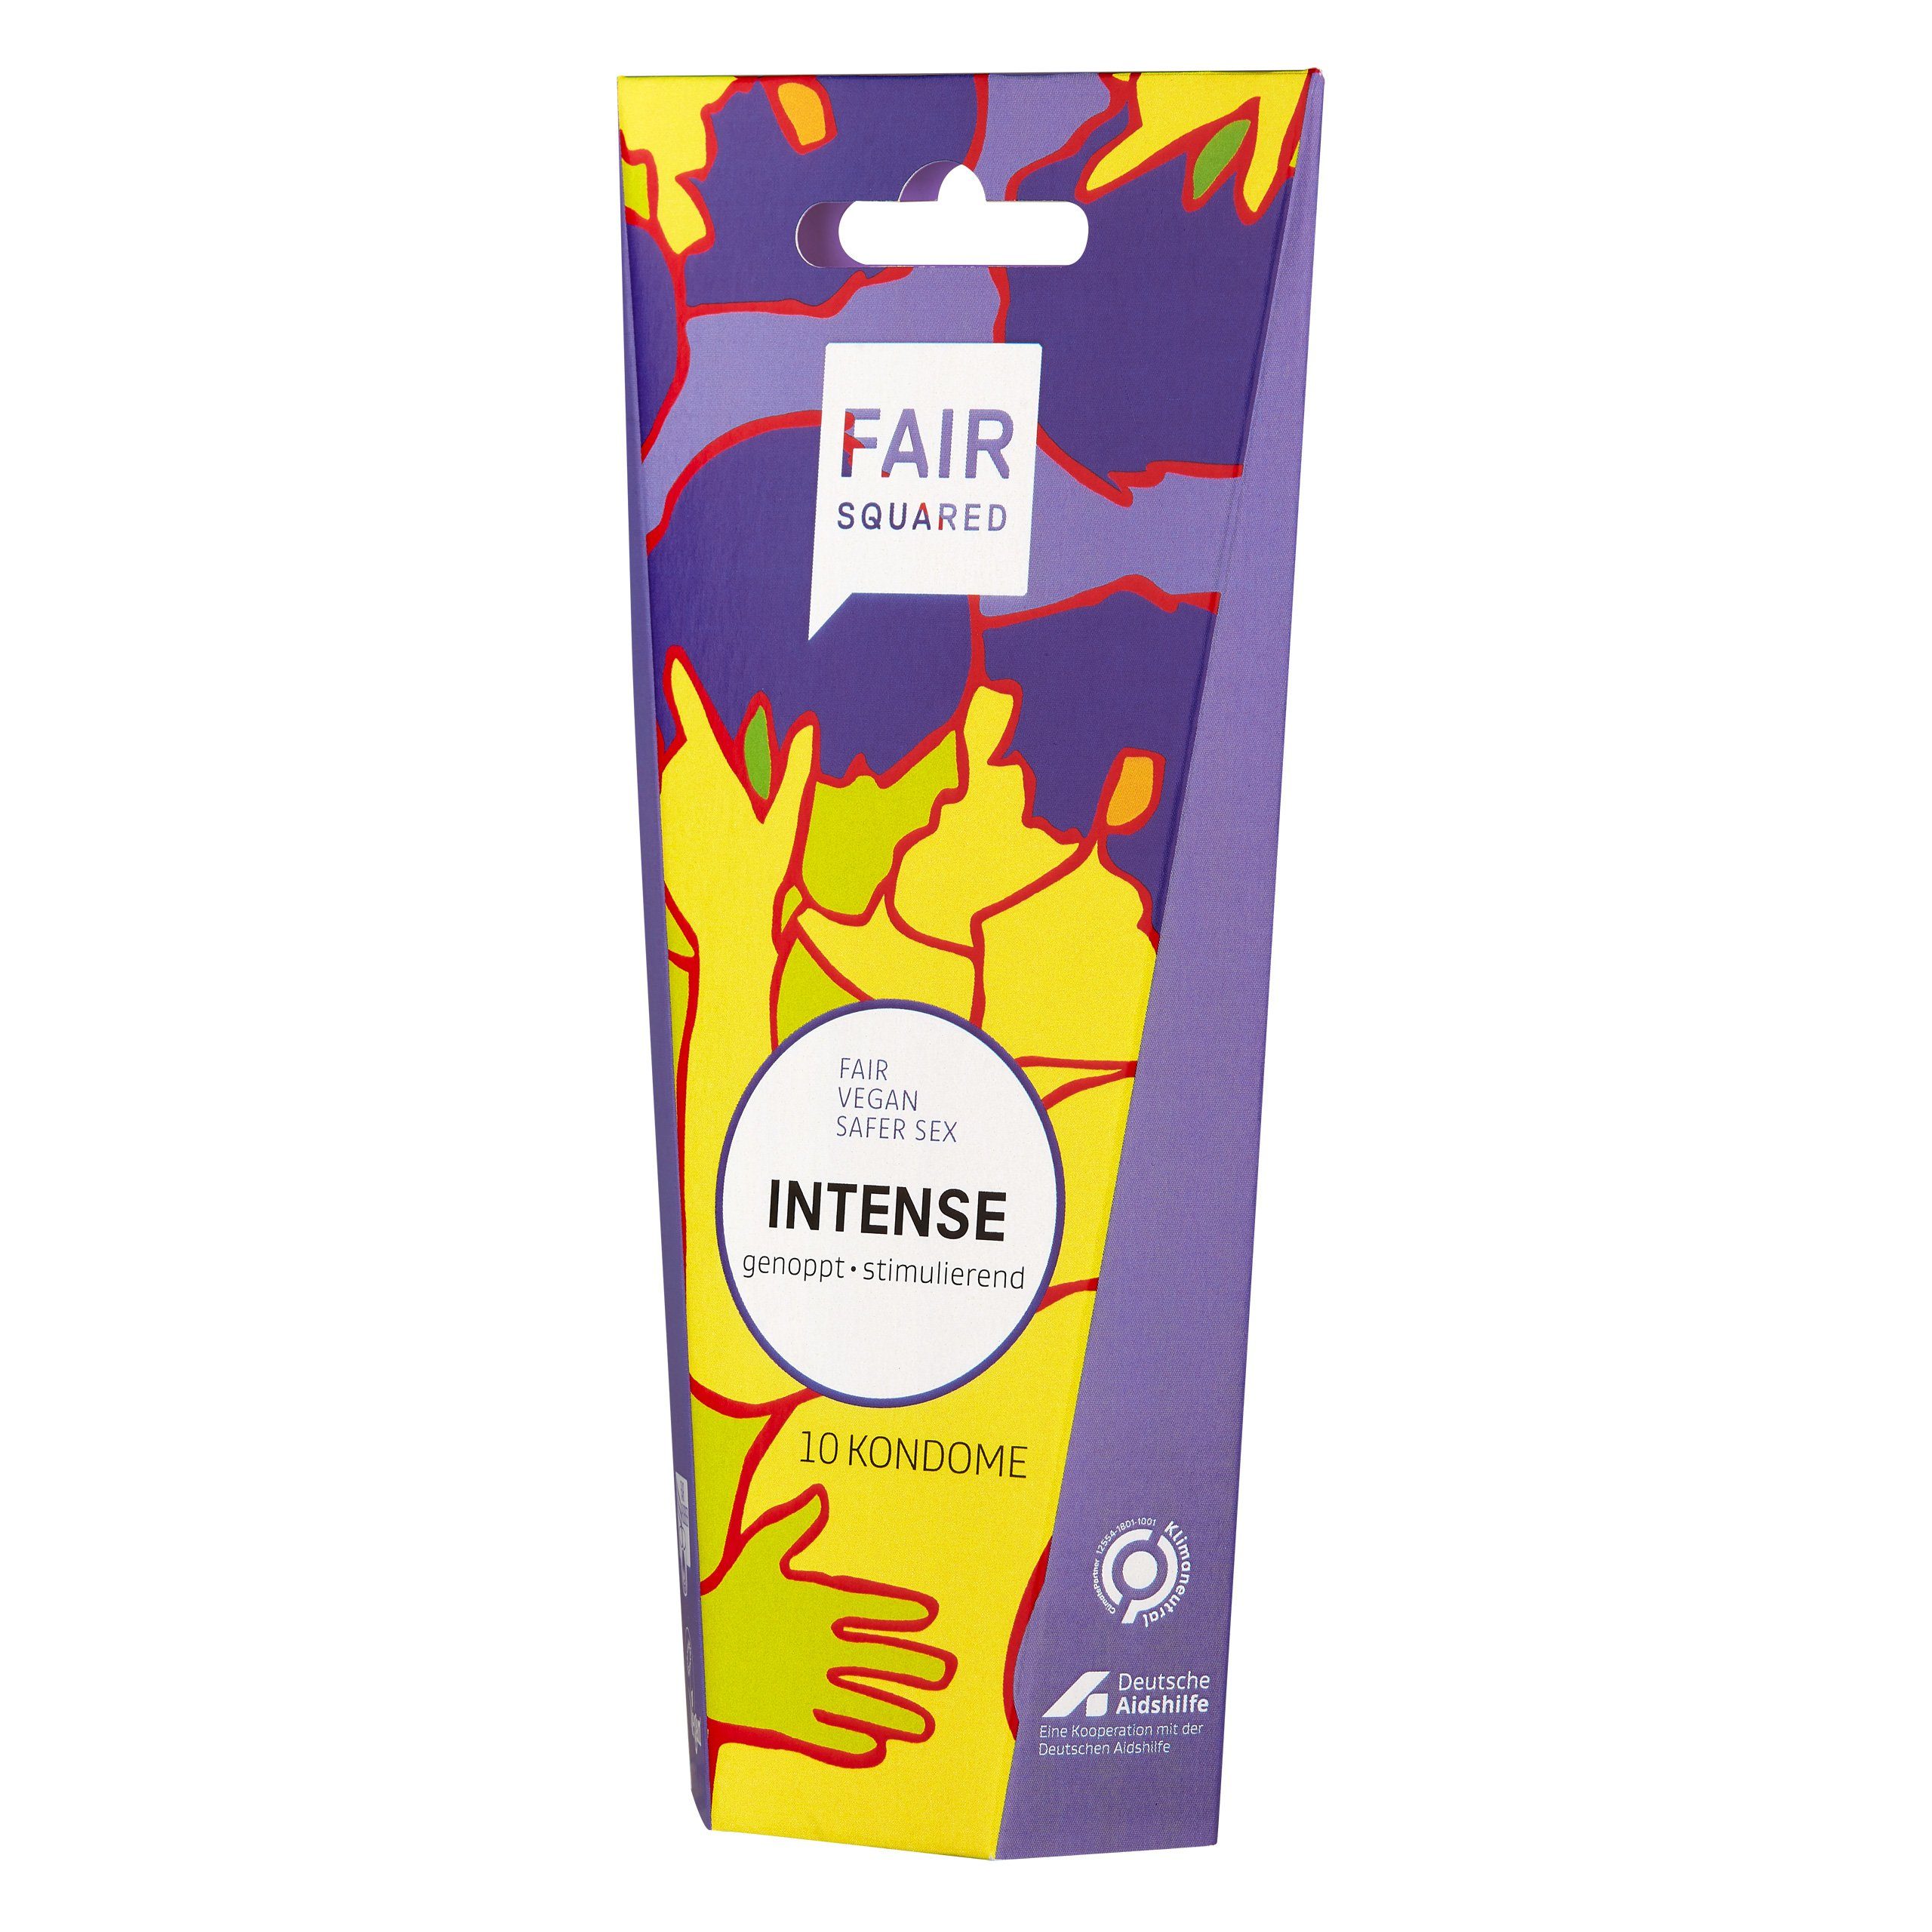 Squared Kondome INTENSE genoppt Kondome FAIR SQUARED Fair